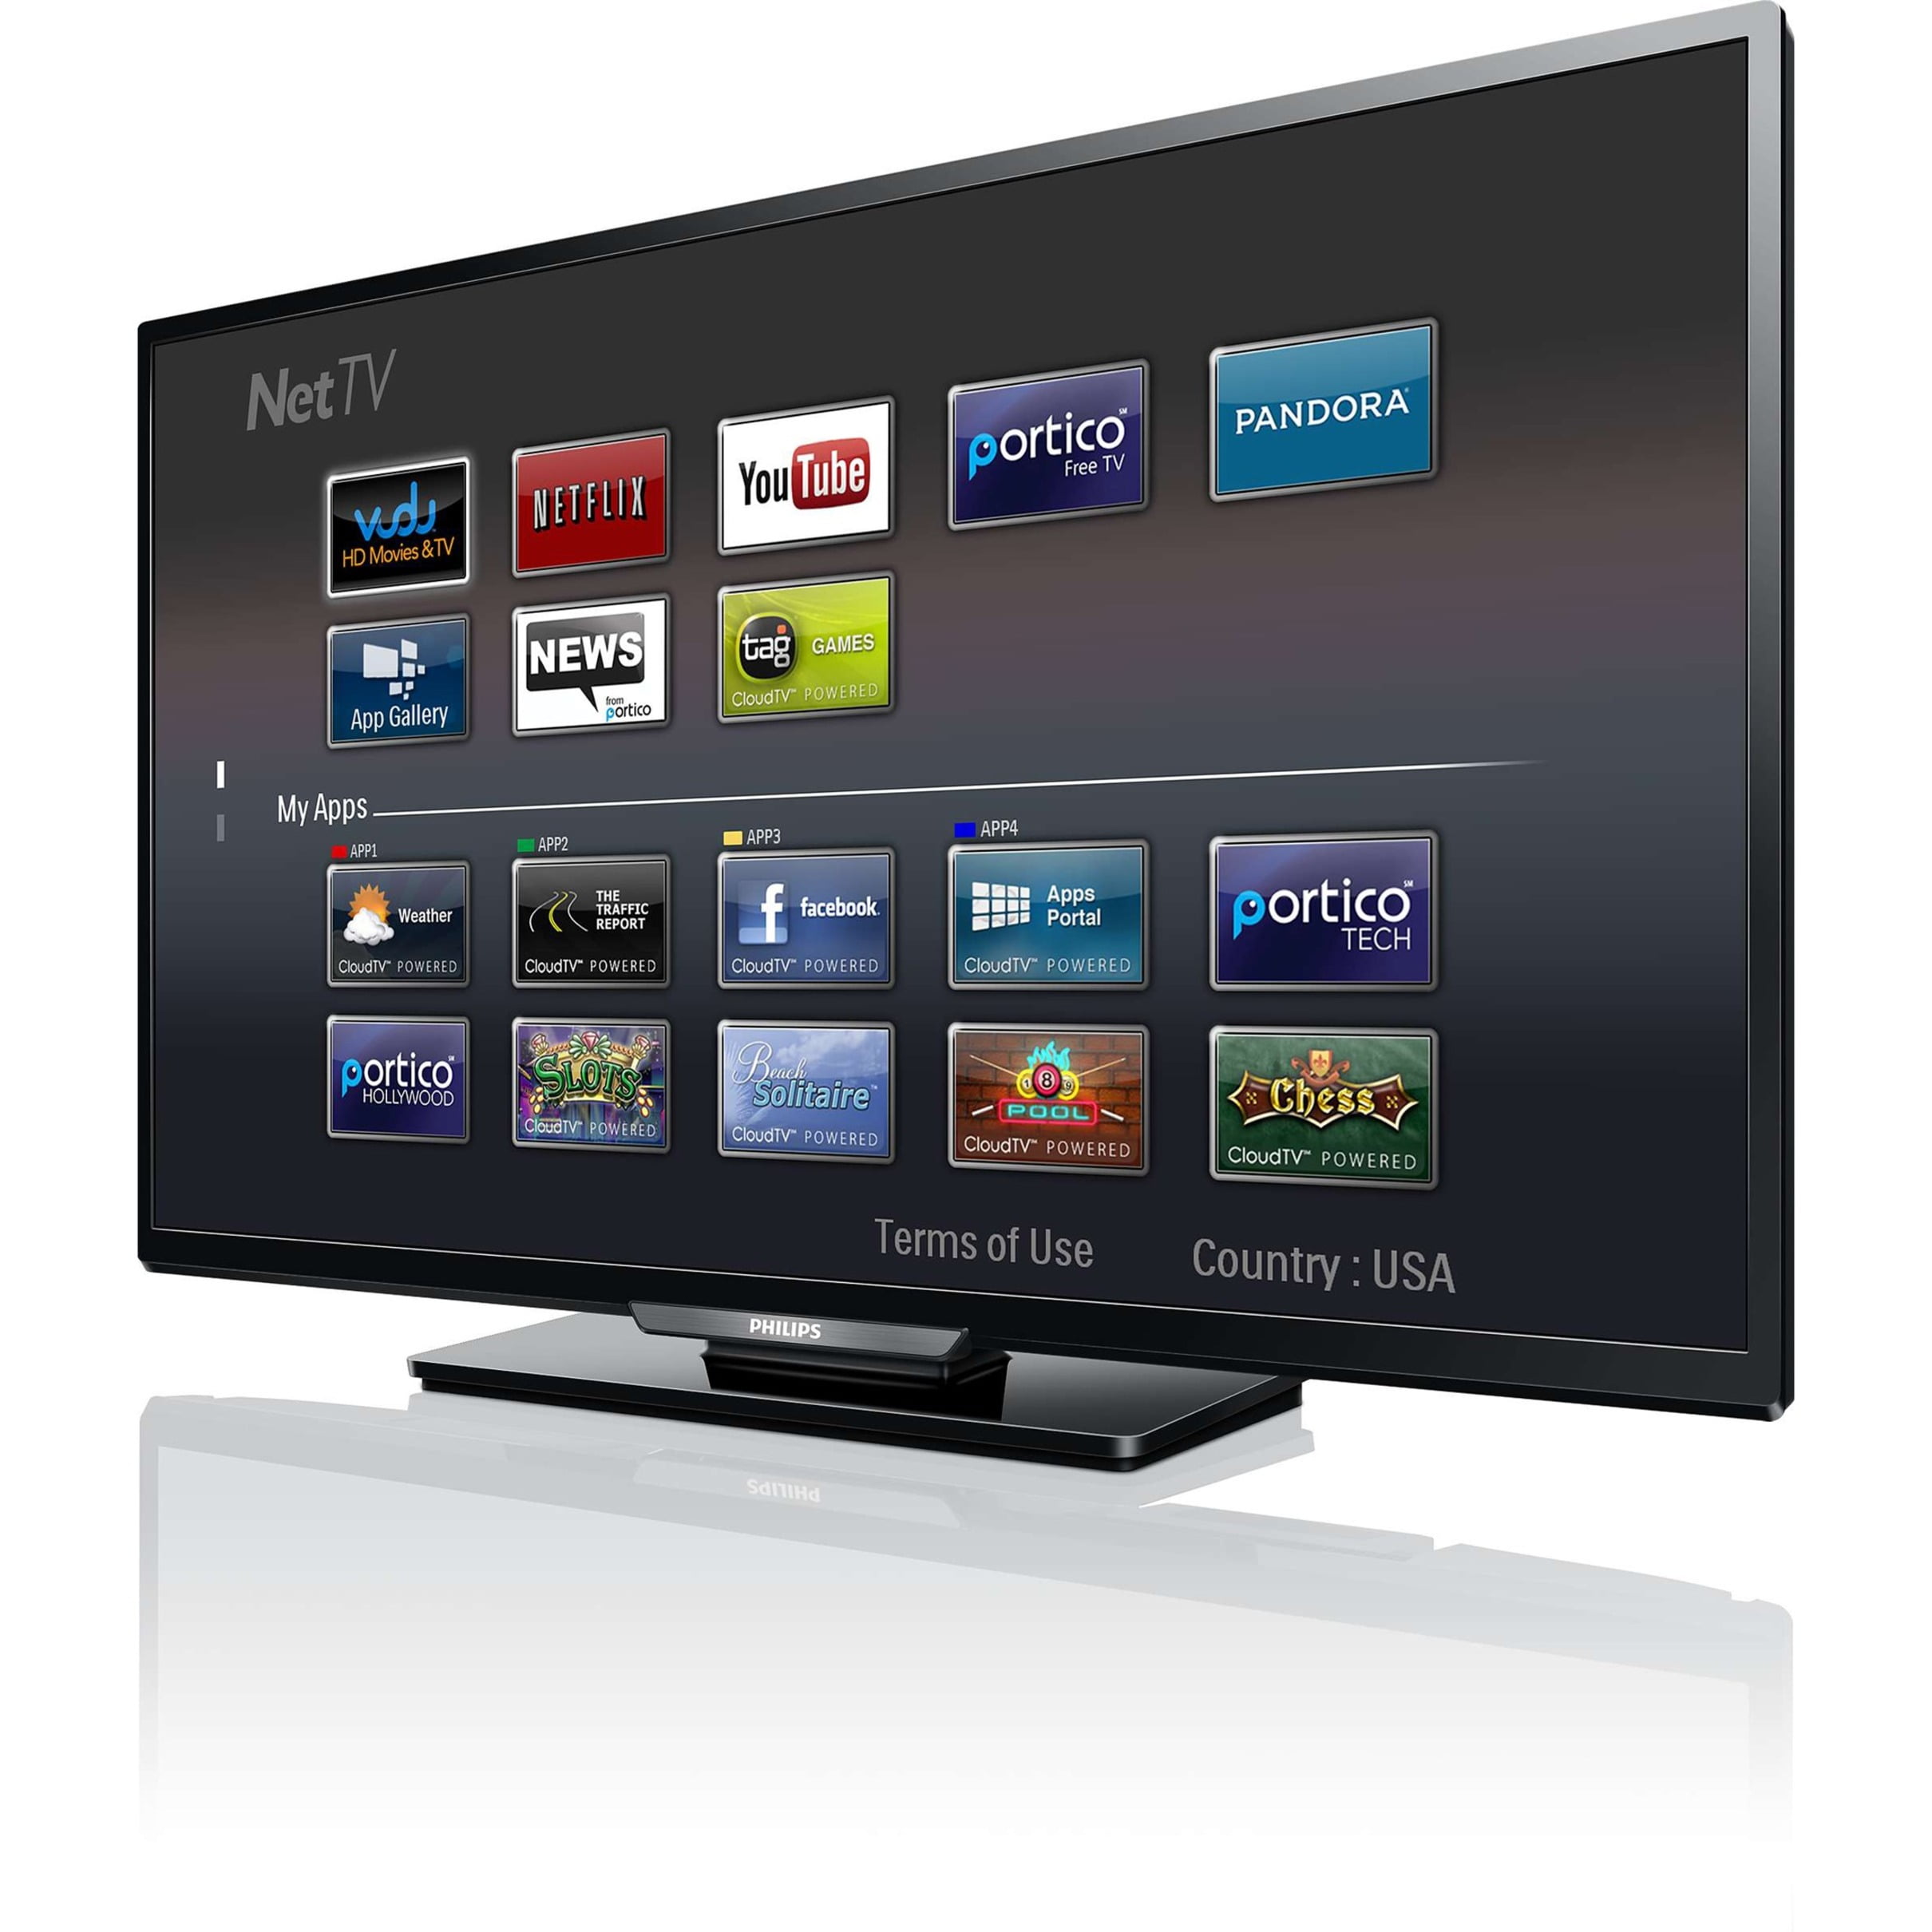 Днс смарт тв телевизоры цены. Philips Smart TV. Телевизор Филипс 2013 года Интерфейс смарт ТВ. Телевизор Philips 40pfl4508t\60» Smart TV. Телевизор Филипс смарт ТВ 2013 года серый.